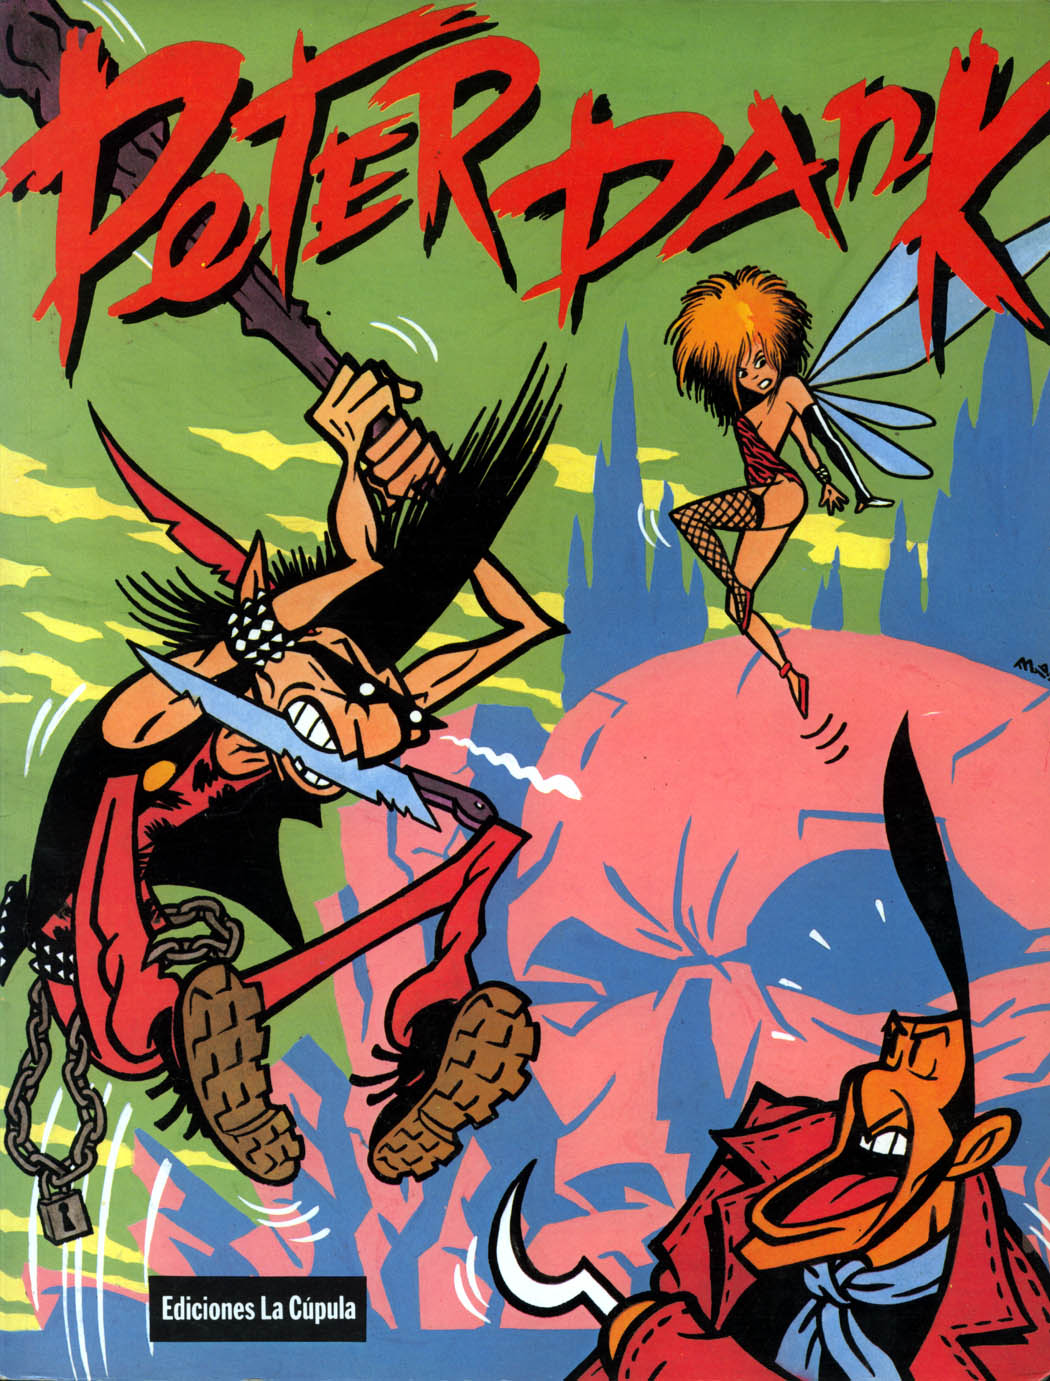 El topic de los grandes comics y dibujantes de los 80s - Página 3 Peter+Pank+%C2%B7+00